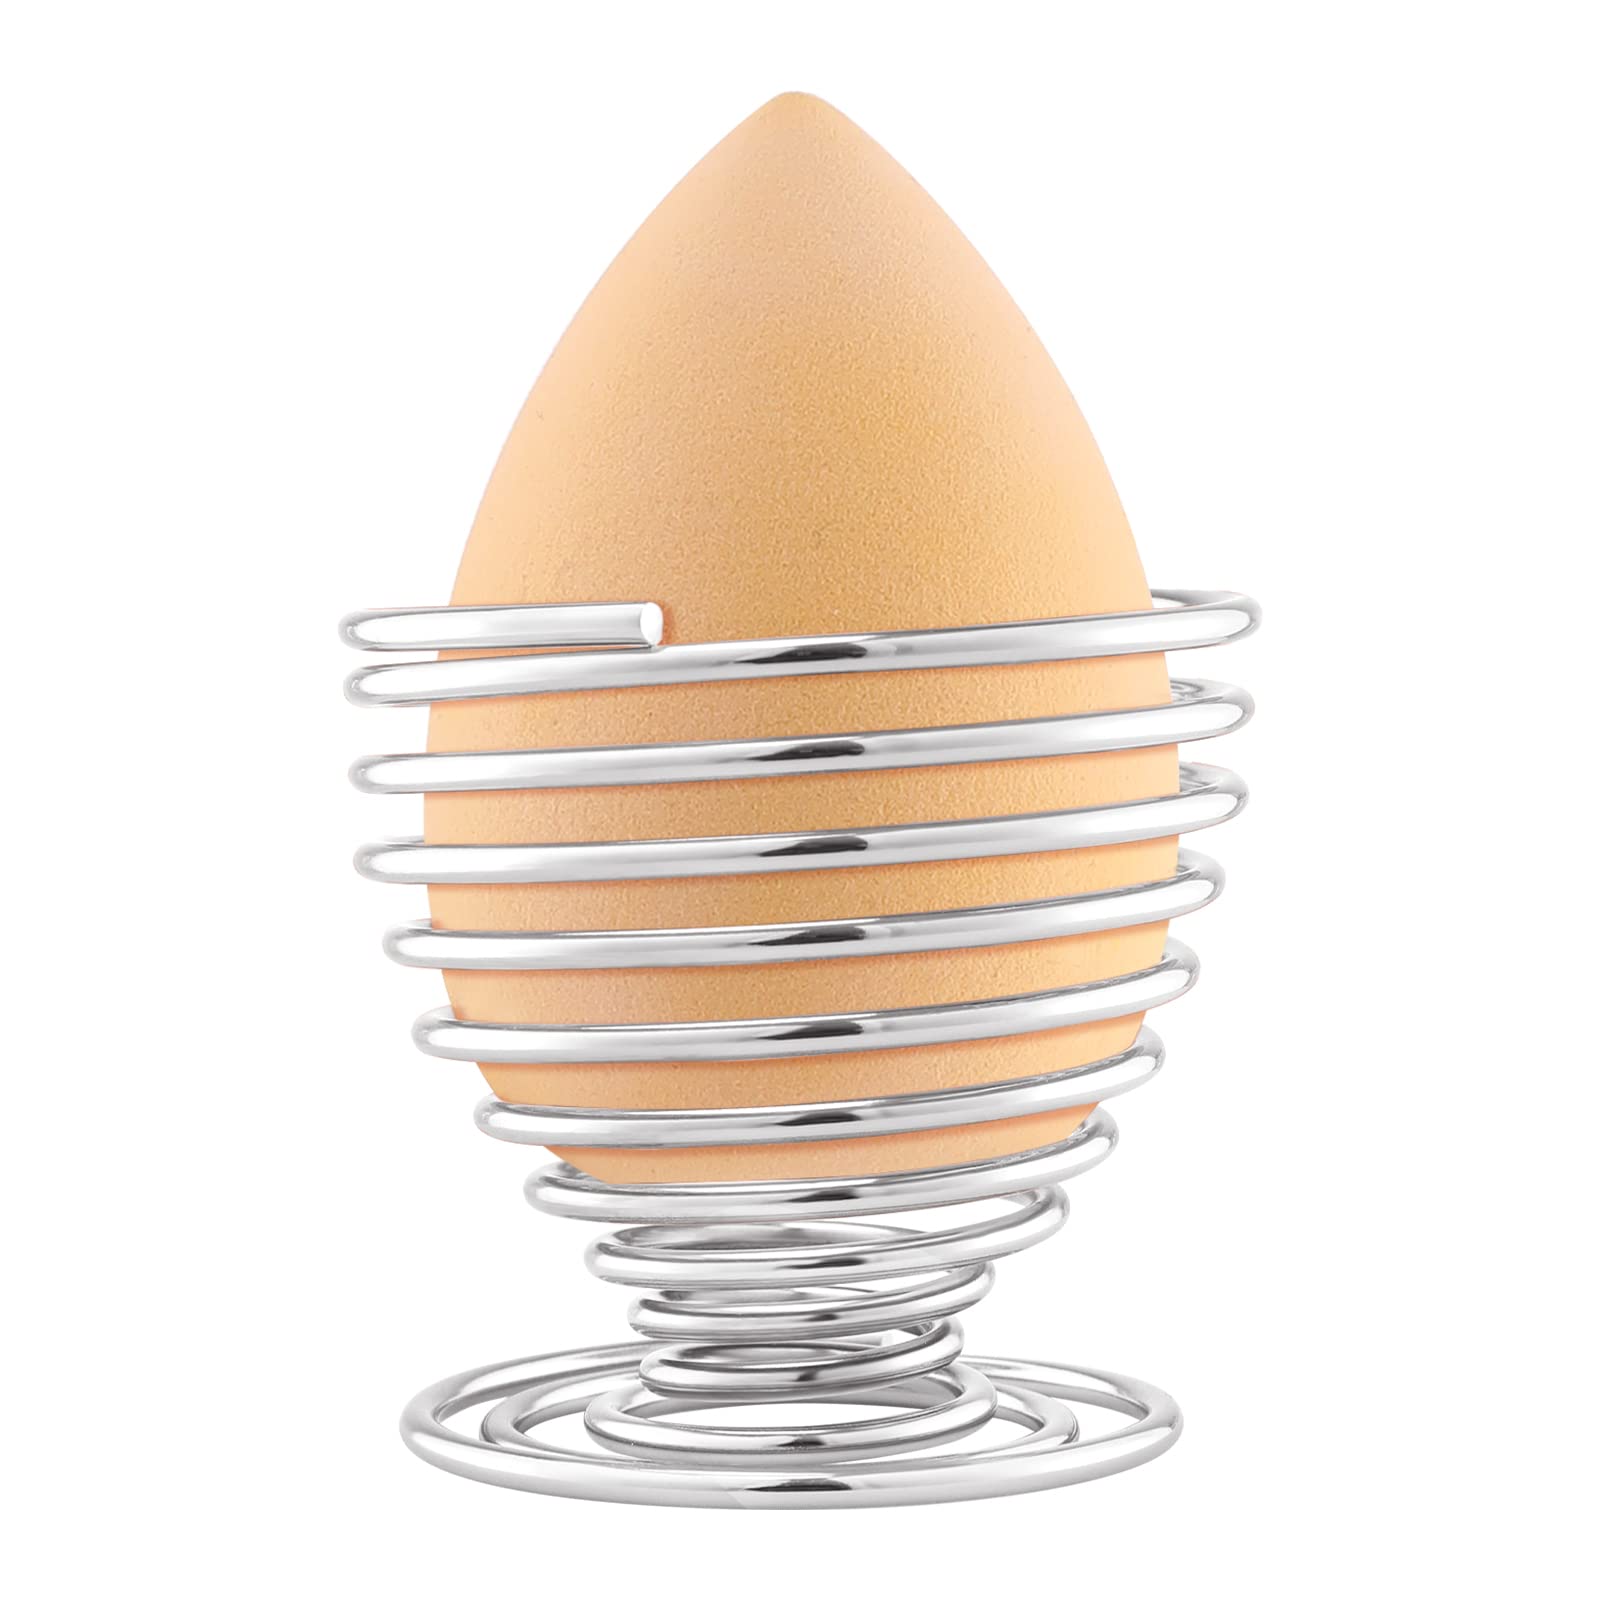  Egg Shape makeup organizer for vanity,portable